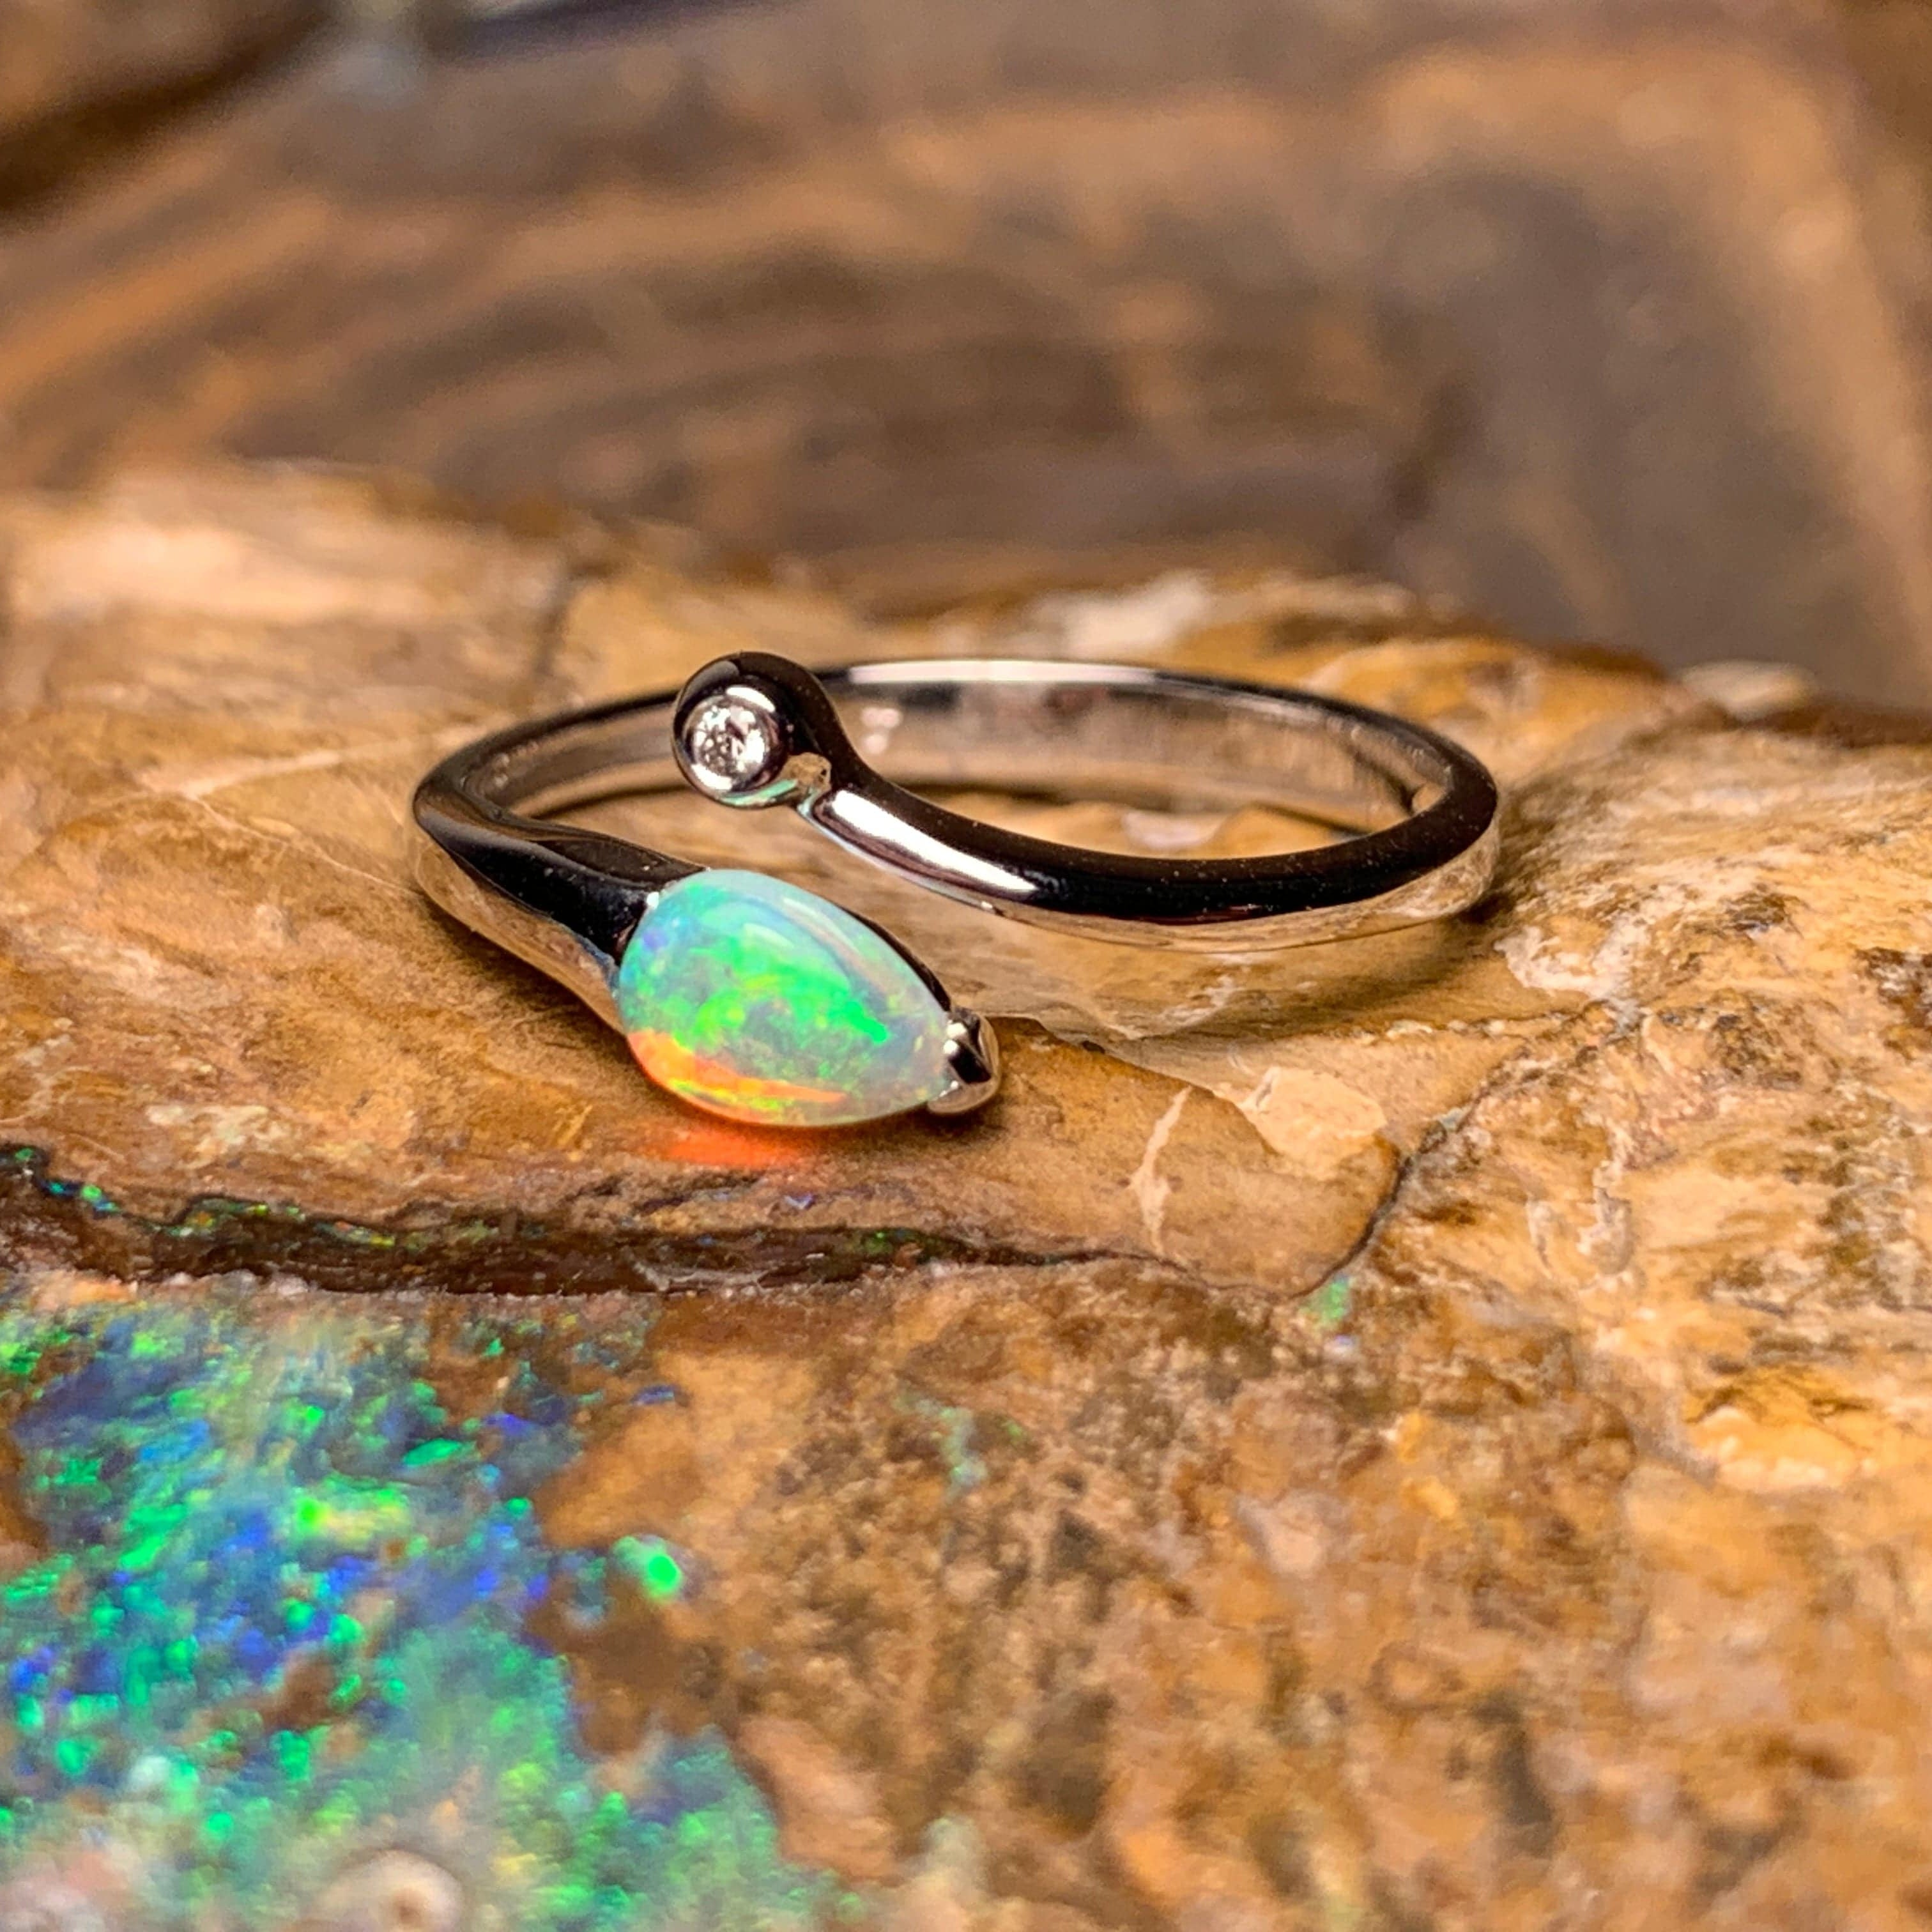 14kt White Gold Opal ring - Masterpiece Jewellery Opal & Gems Sydney Australia | Online Shop